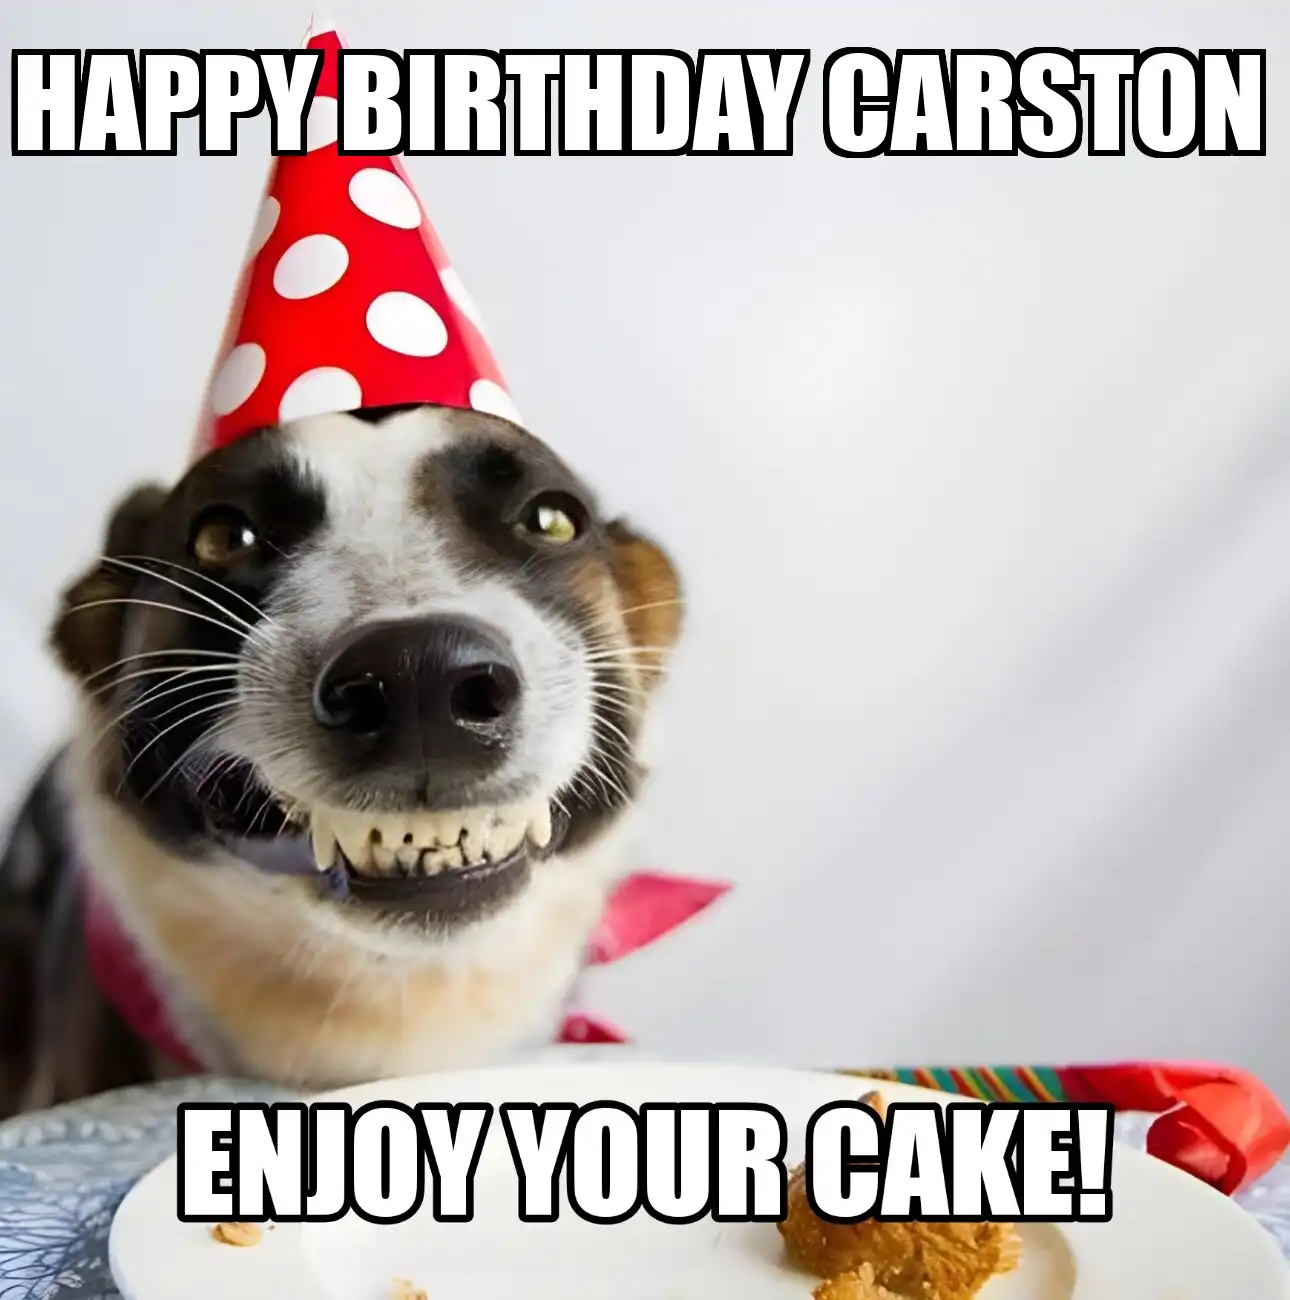 Happy Birthday Carston Enjoy Your Cake Dog Meme